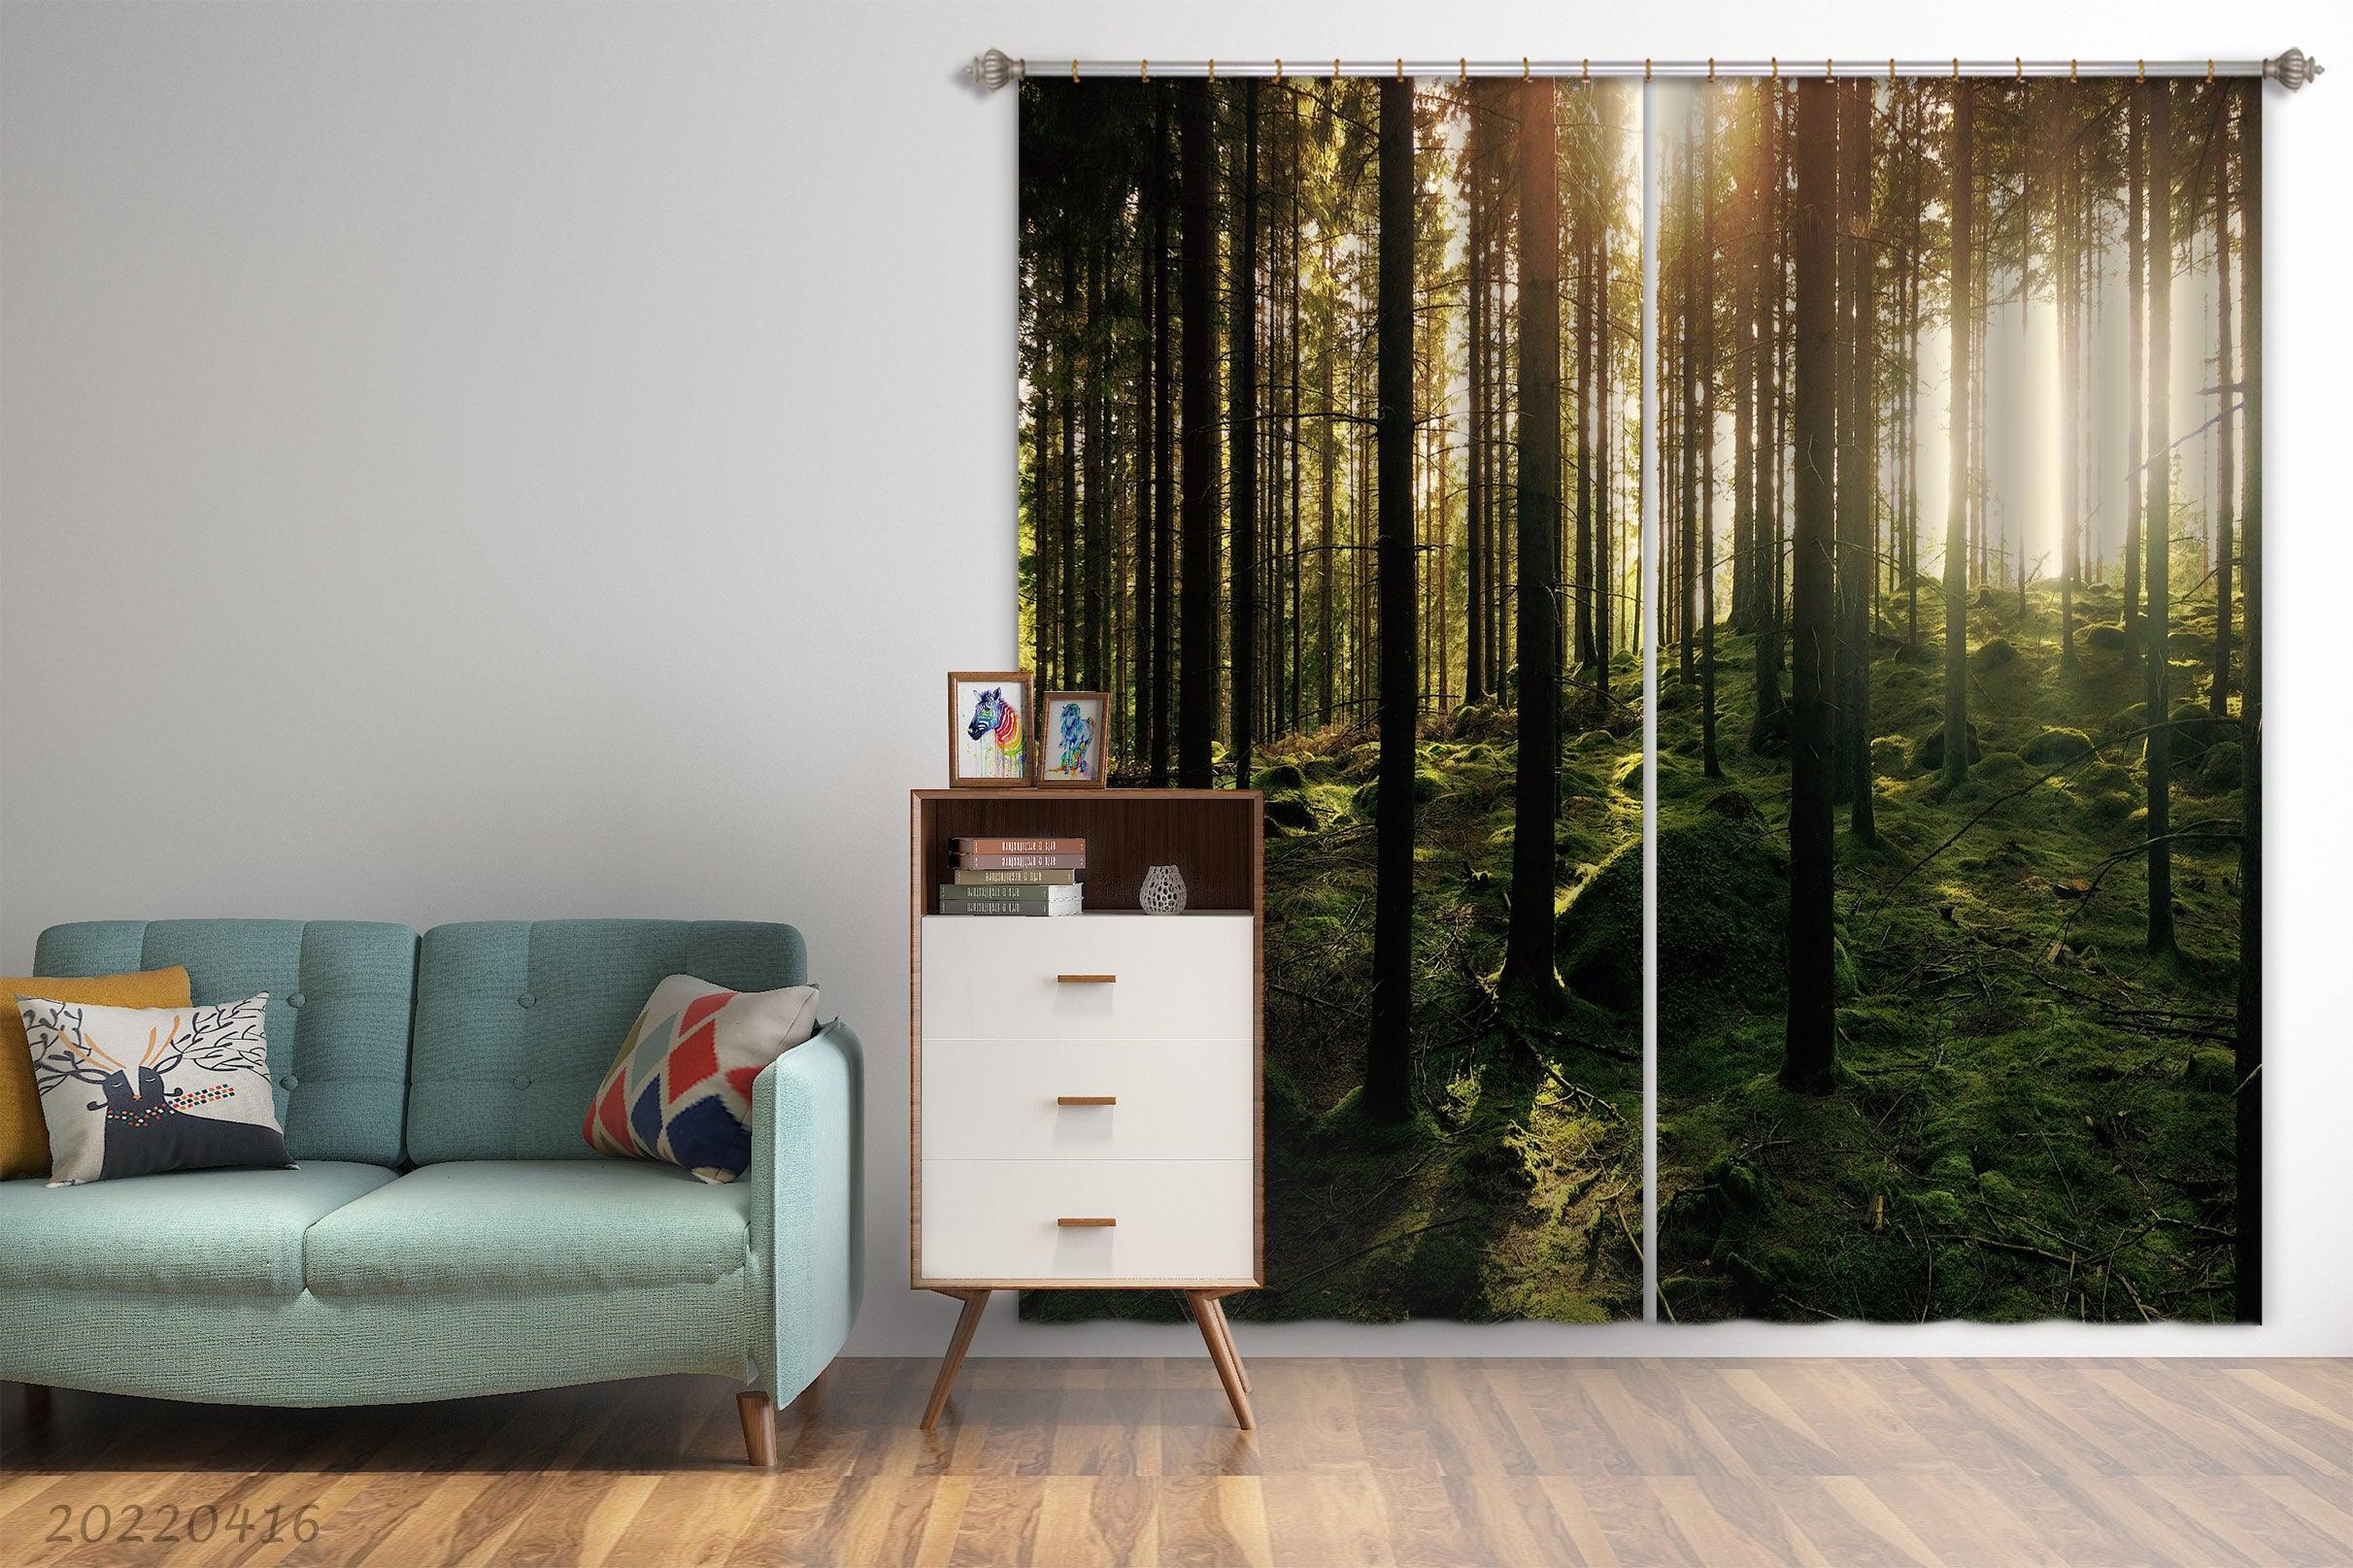 3D Woods Tree Sunbeam Green Vegetation Curtains and Drapes GD 4497- Jess Art Decoration